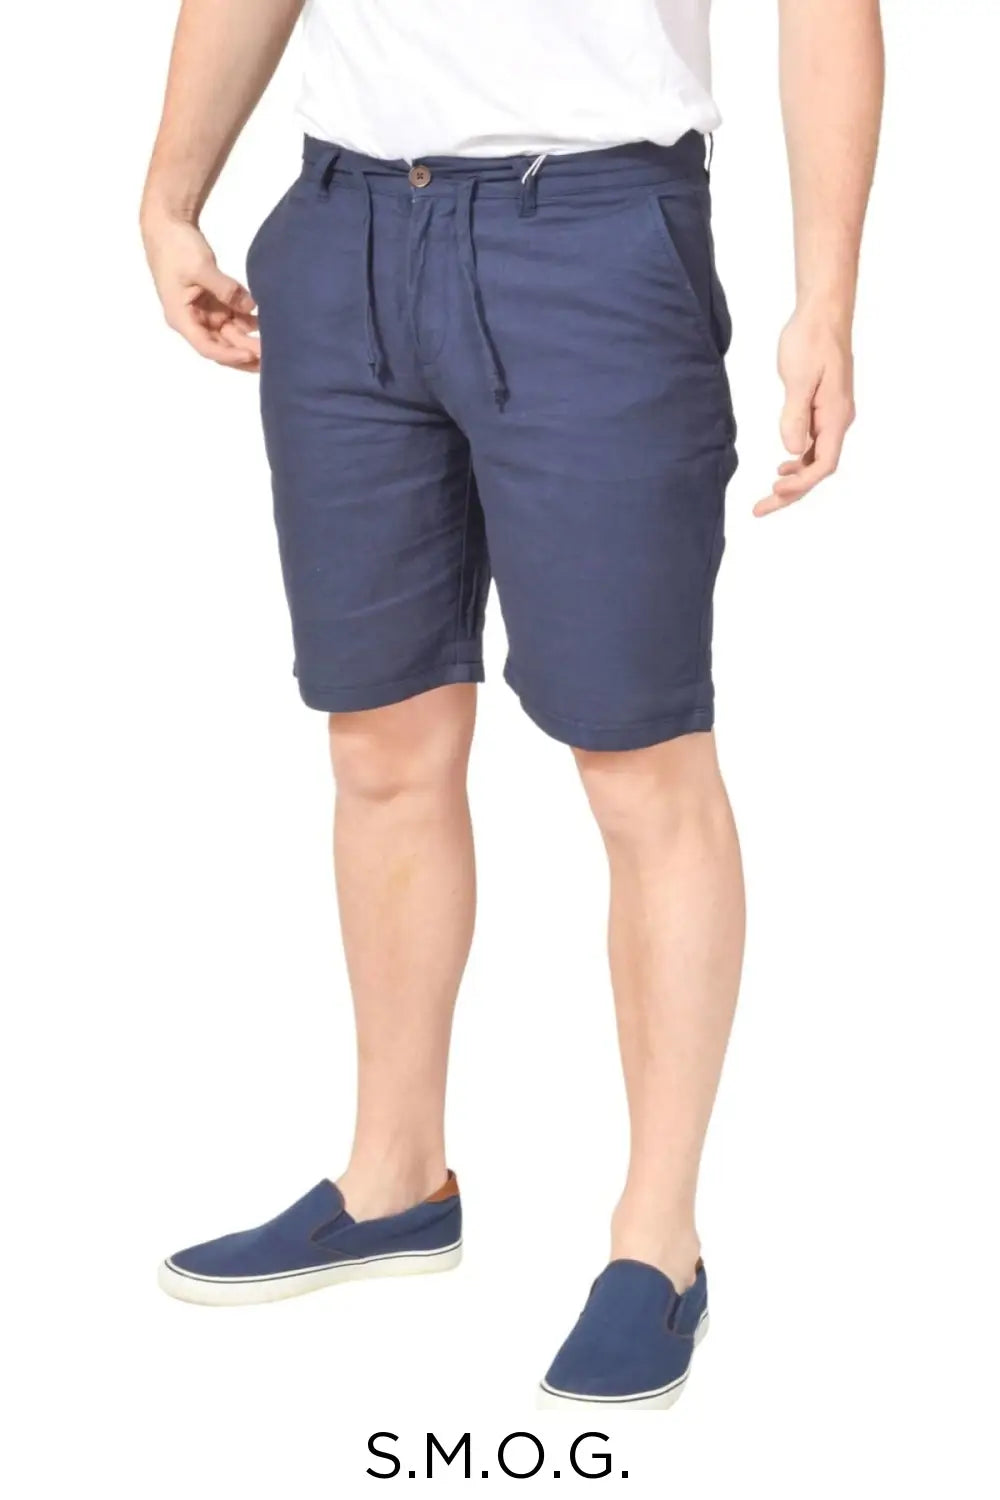 S.M.O.G. Classic Linen Shorts Navy / S